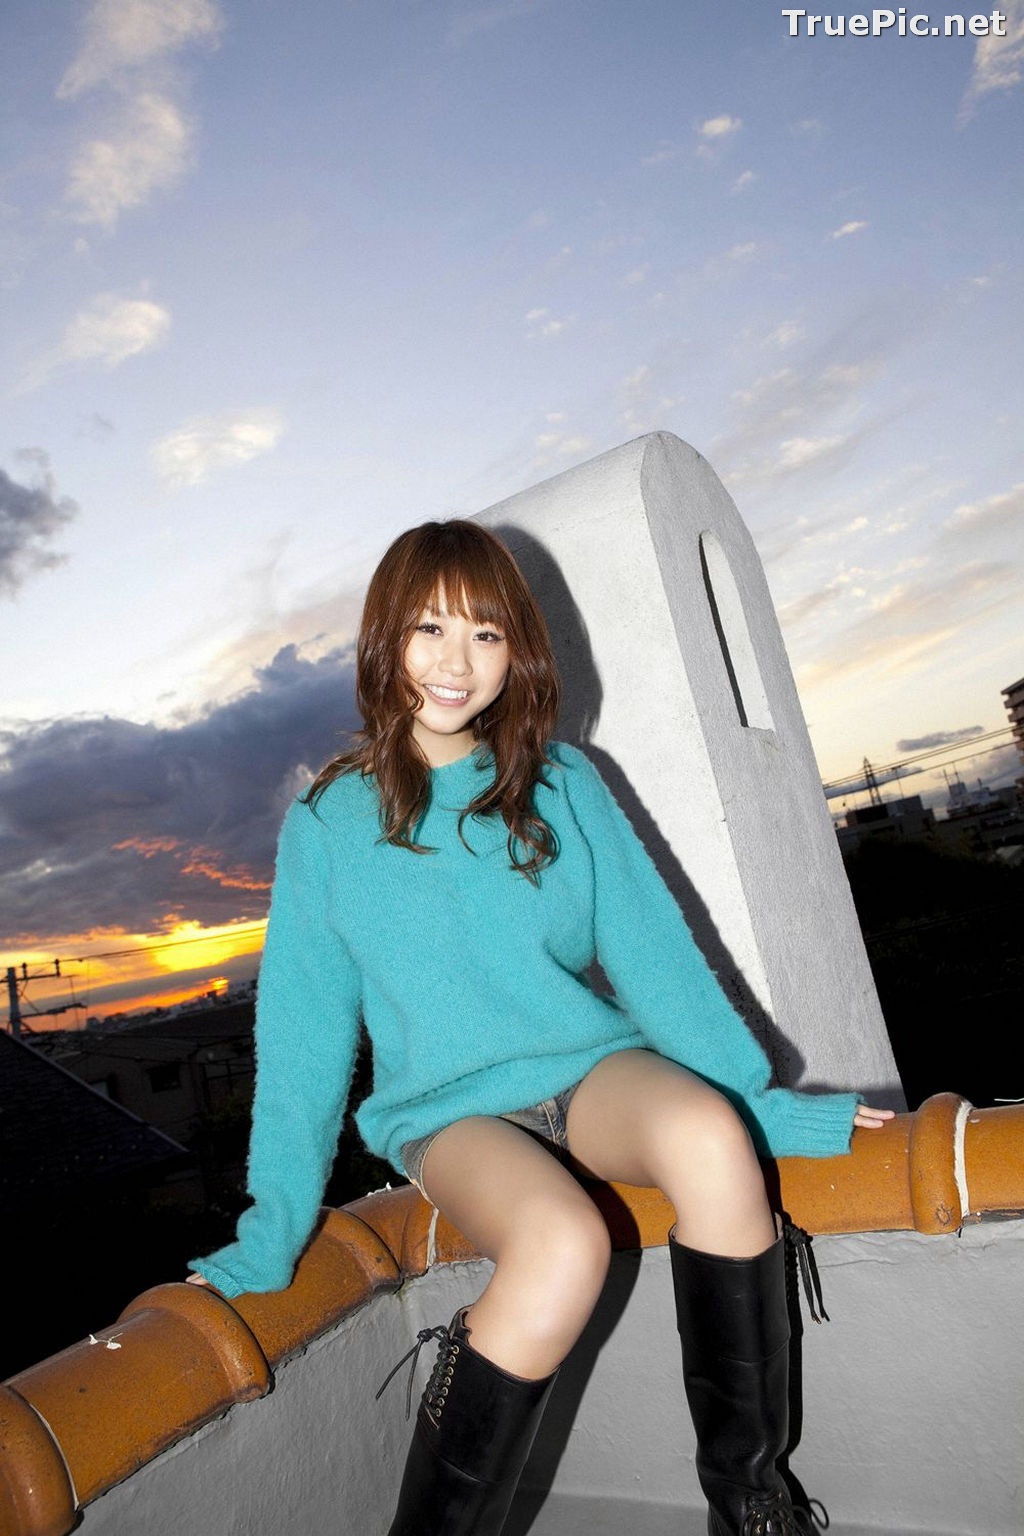 Image [YS Web] Vol.356 - Japanese Gravure Idol and Actress - Mai Nishida - TruePic.net - Picture-60